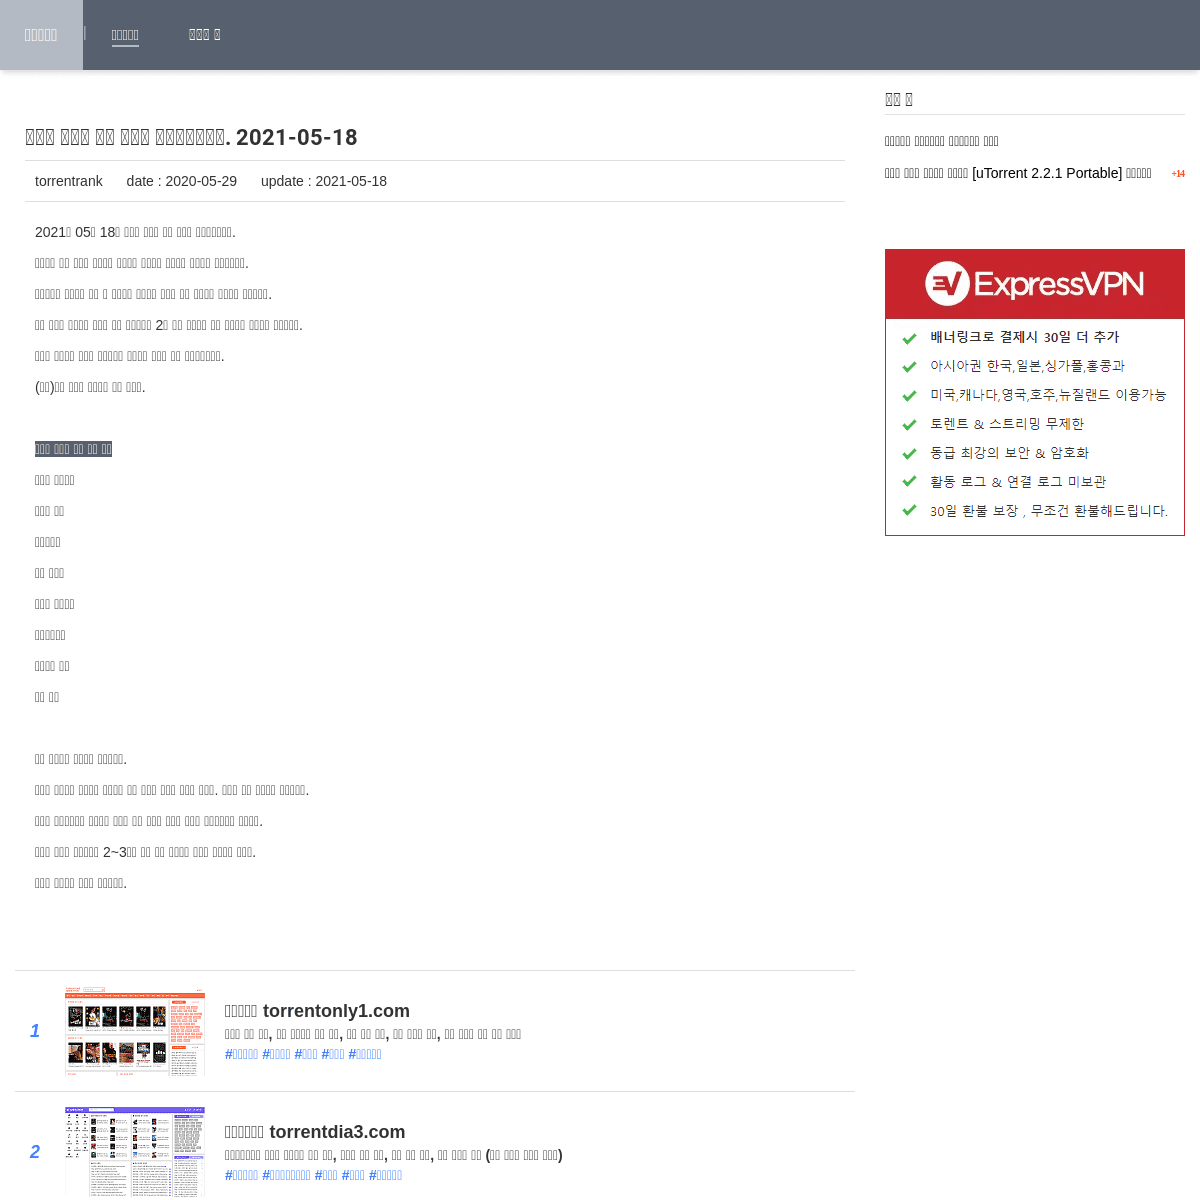 A complete backup of https://torrentrank.net/torrentrank